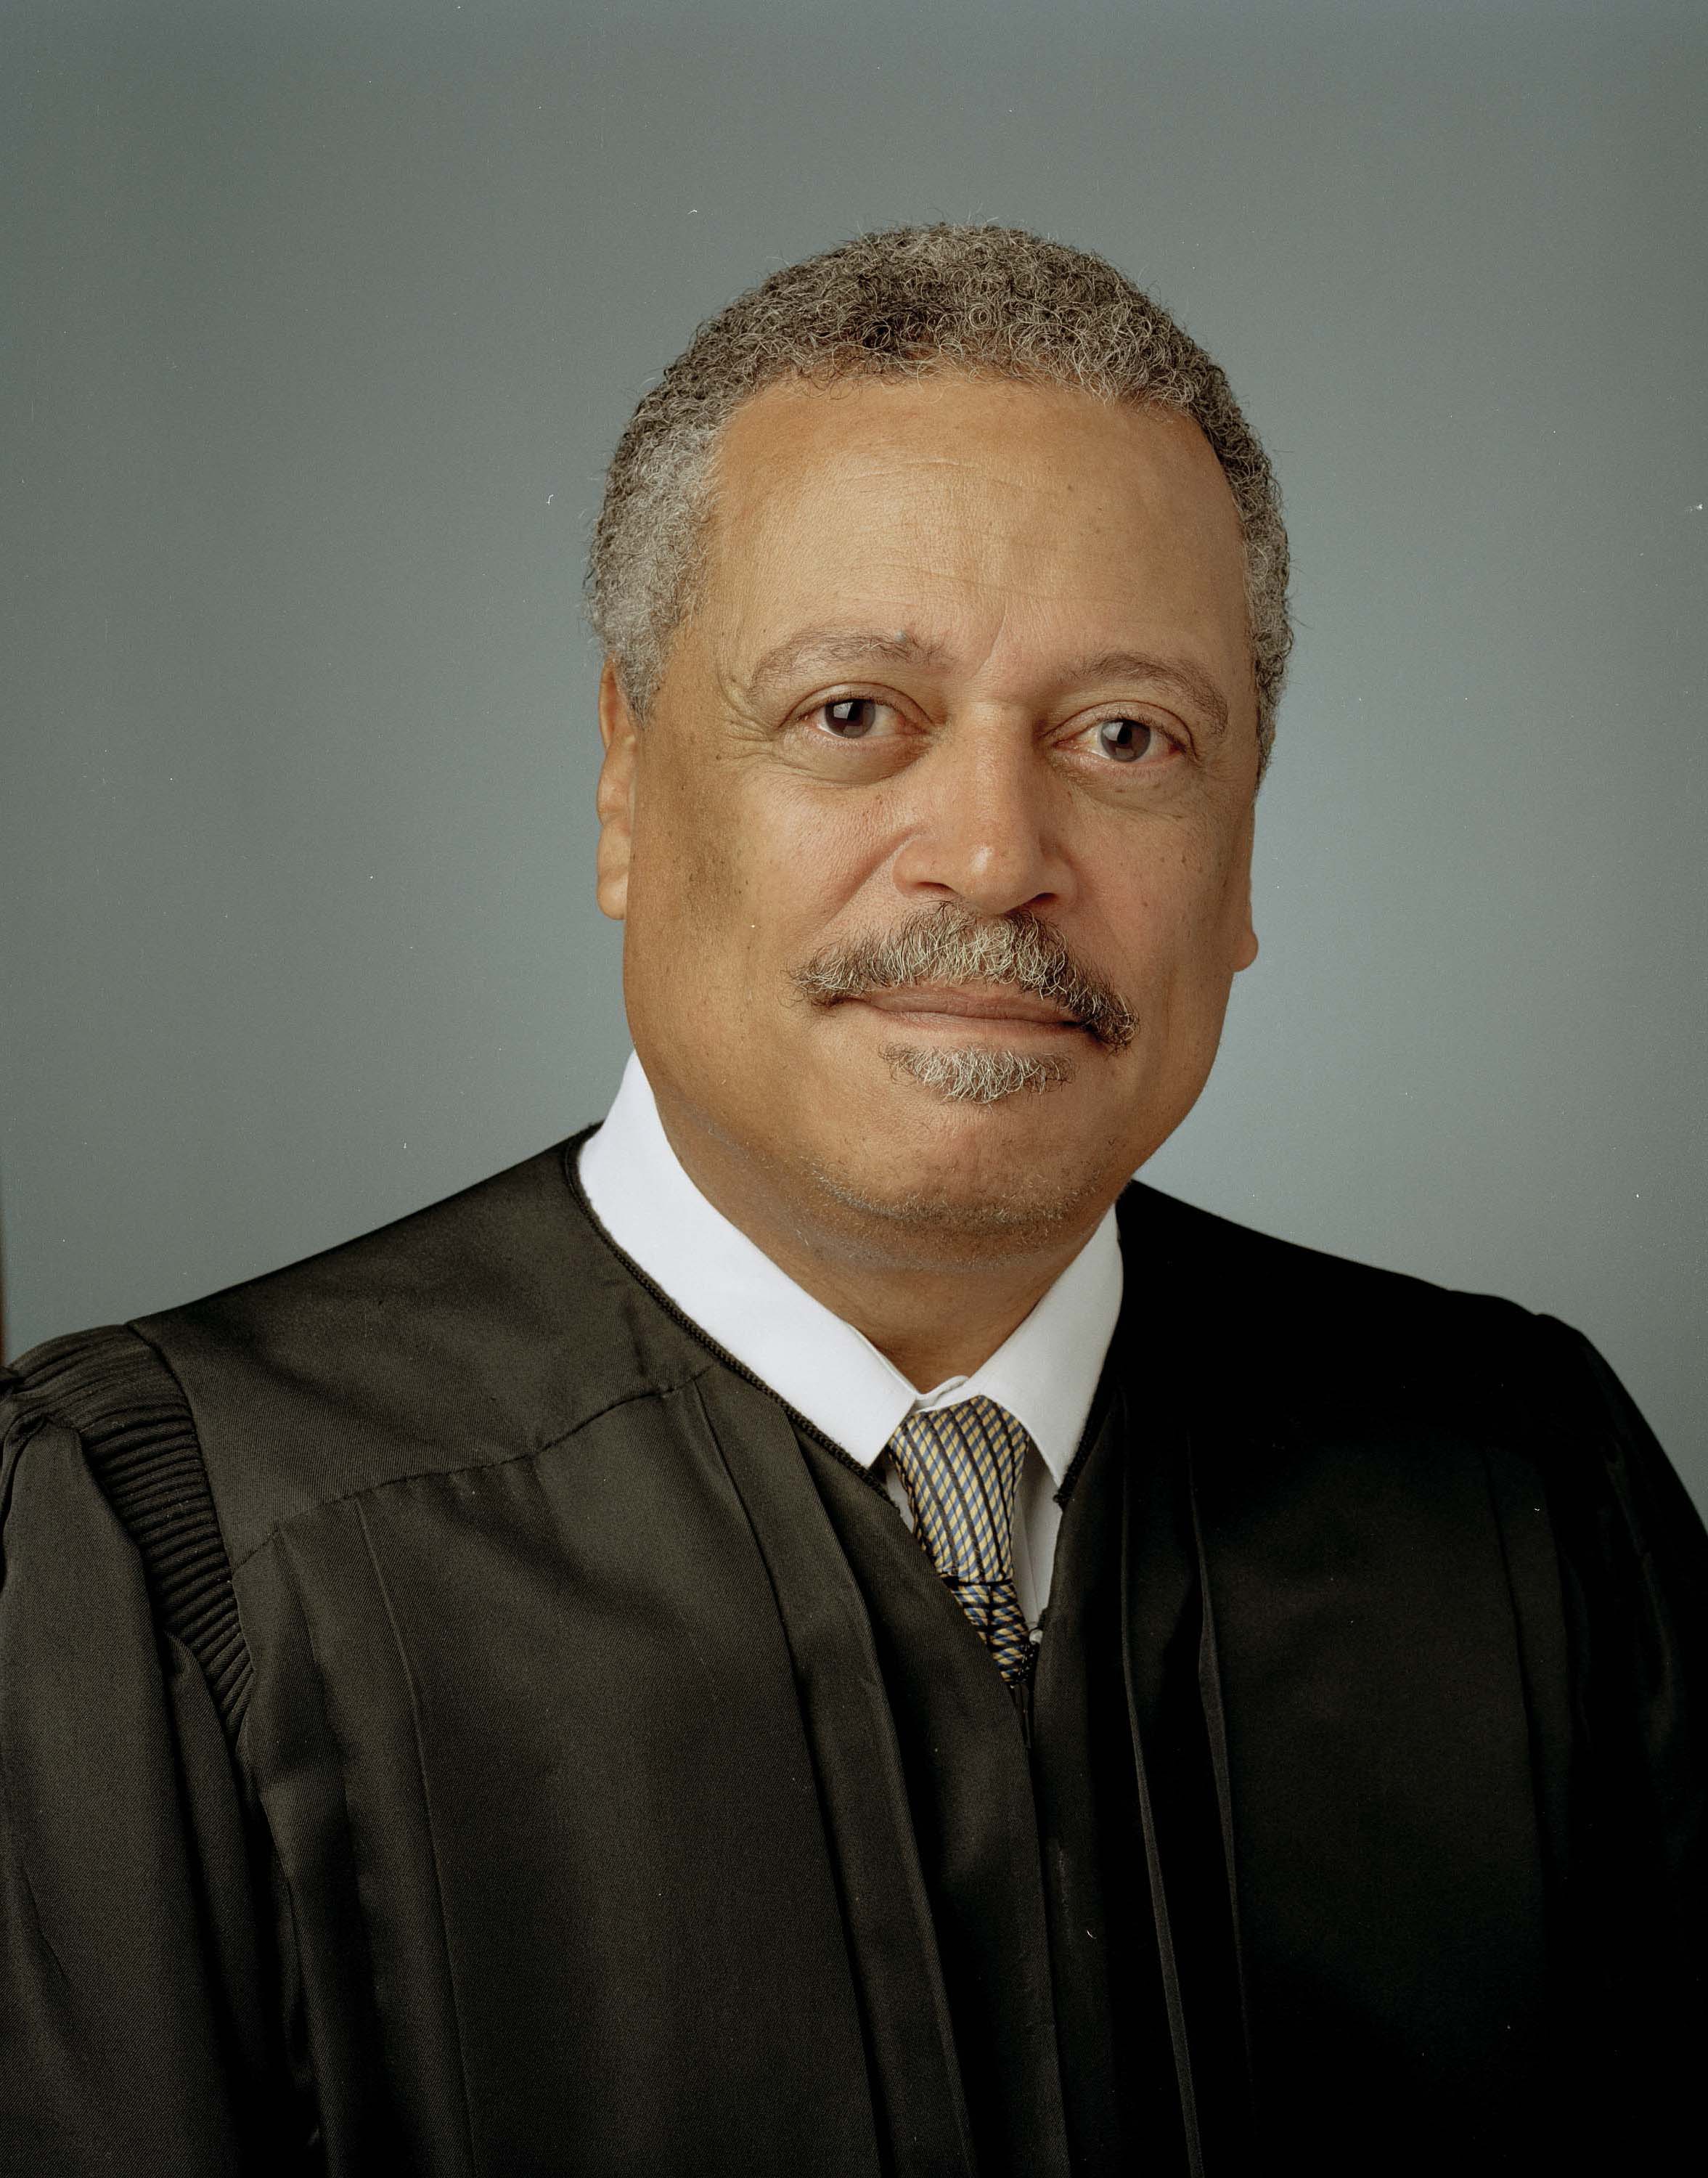 District Judge Emmet G. Sullivan